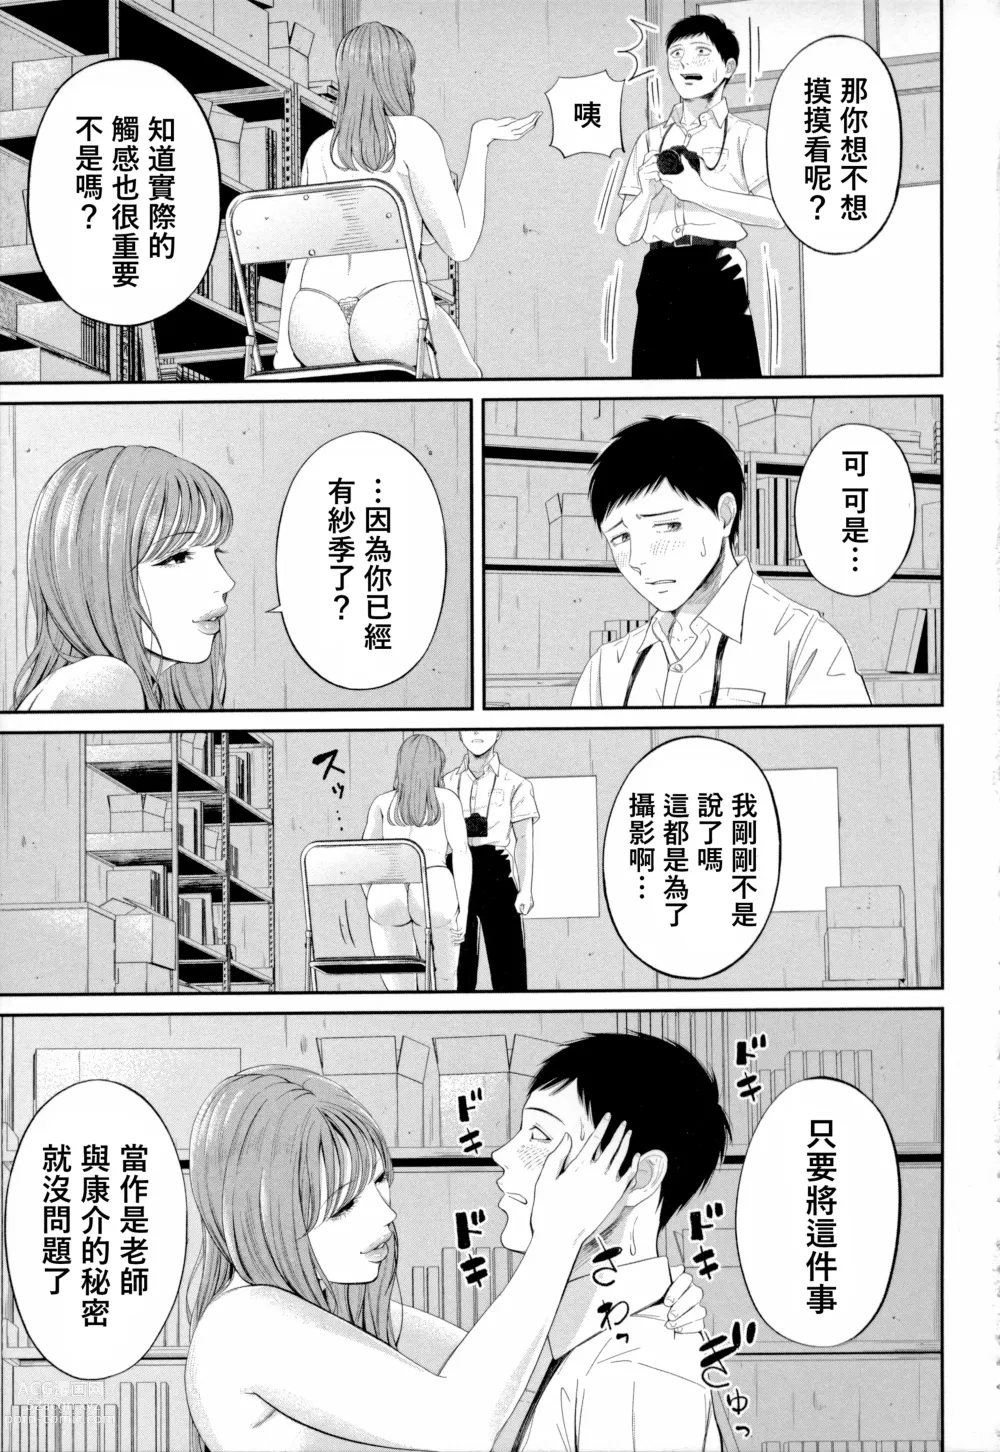 Page 13 of manga Senjou no Misshitsu